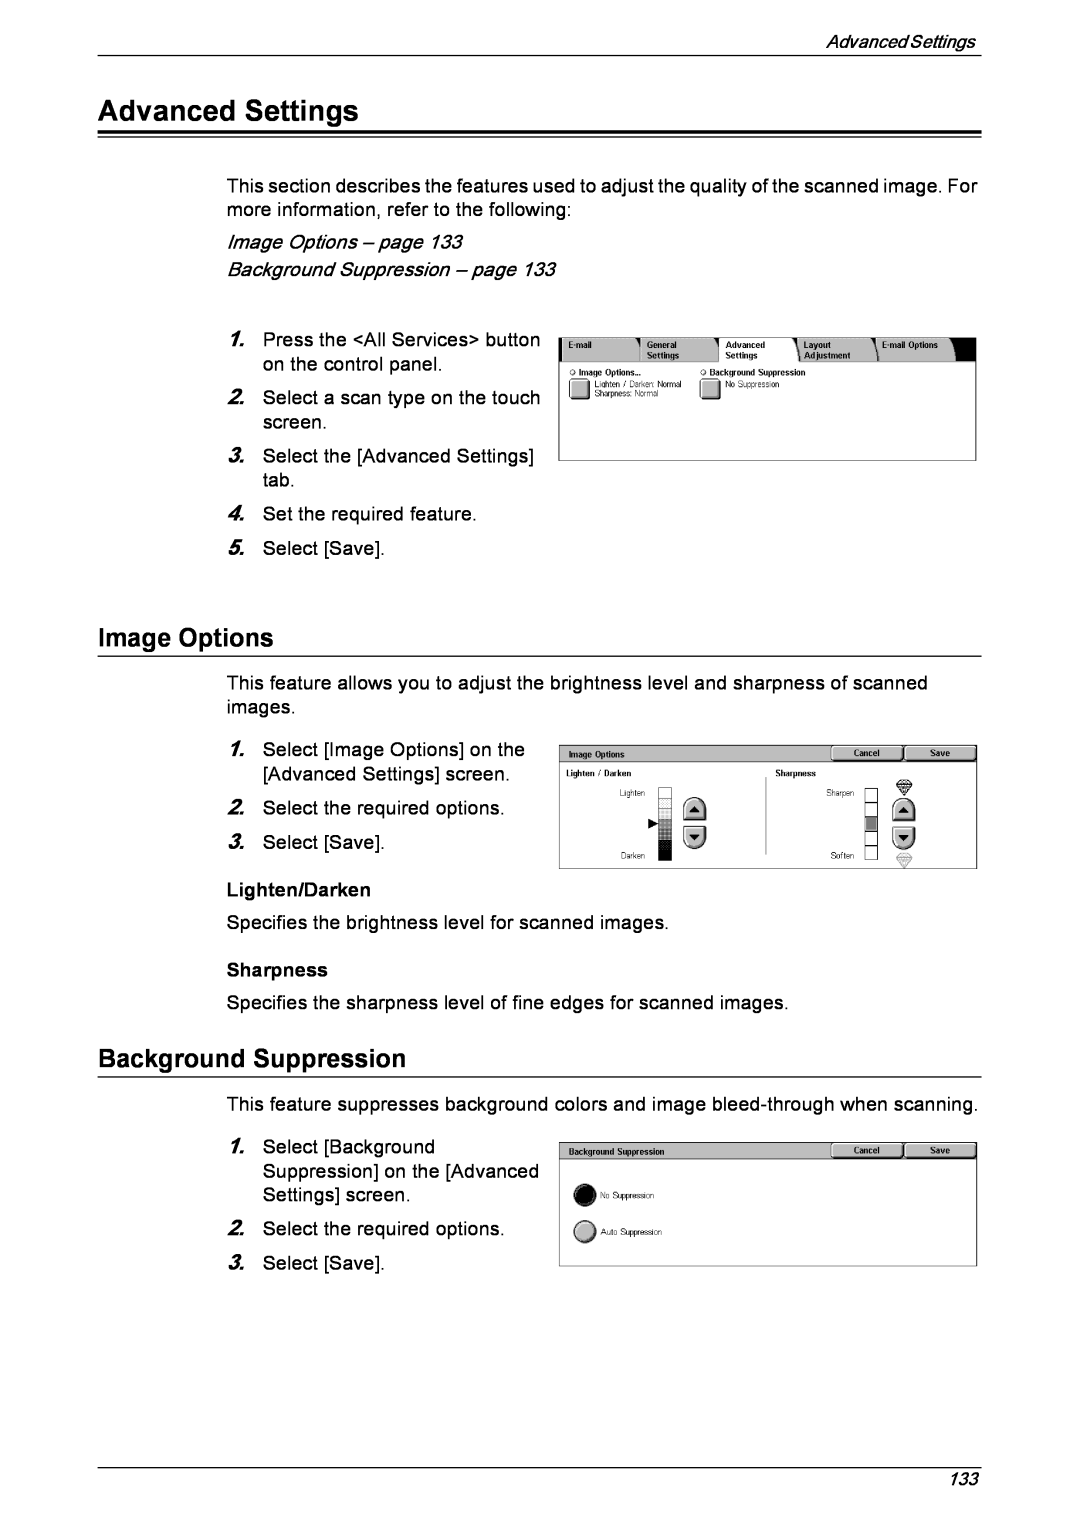 Xerox 5230 manual Advanced Settings, Image Options – page, Background Suppression – page, Lighten/Darken, Sharpness 